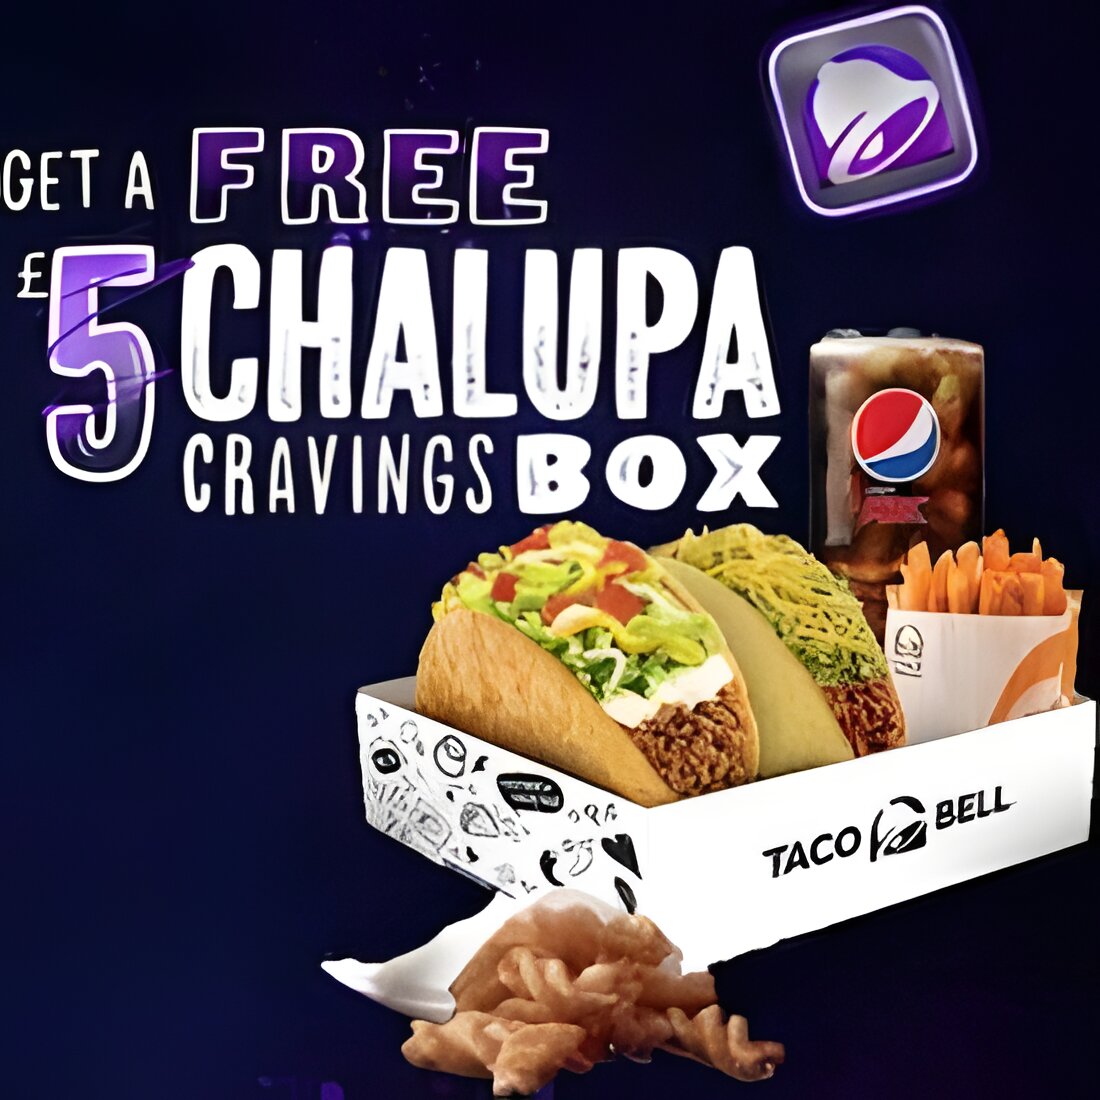 Free Chalupa Cravings Box